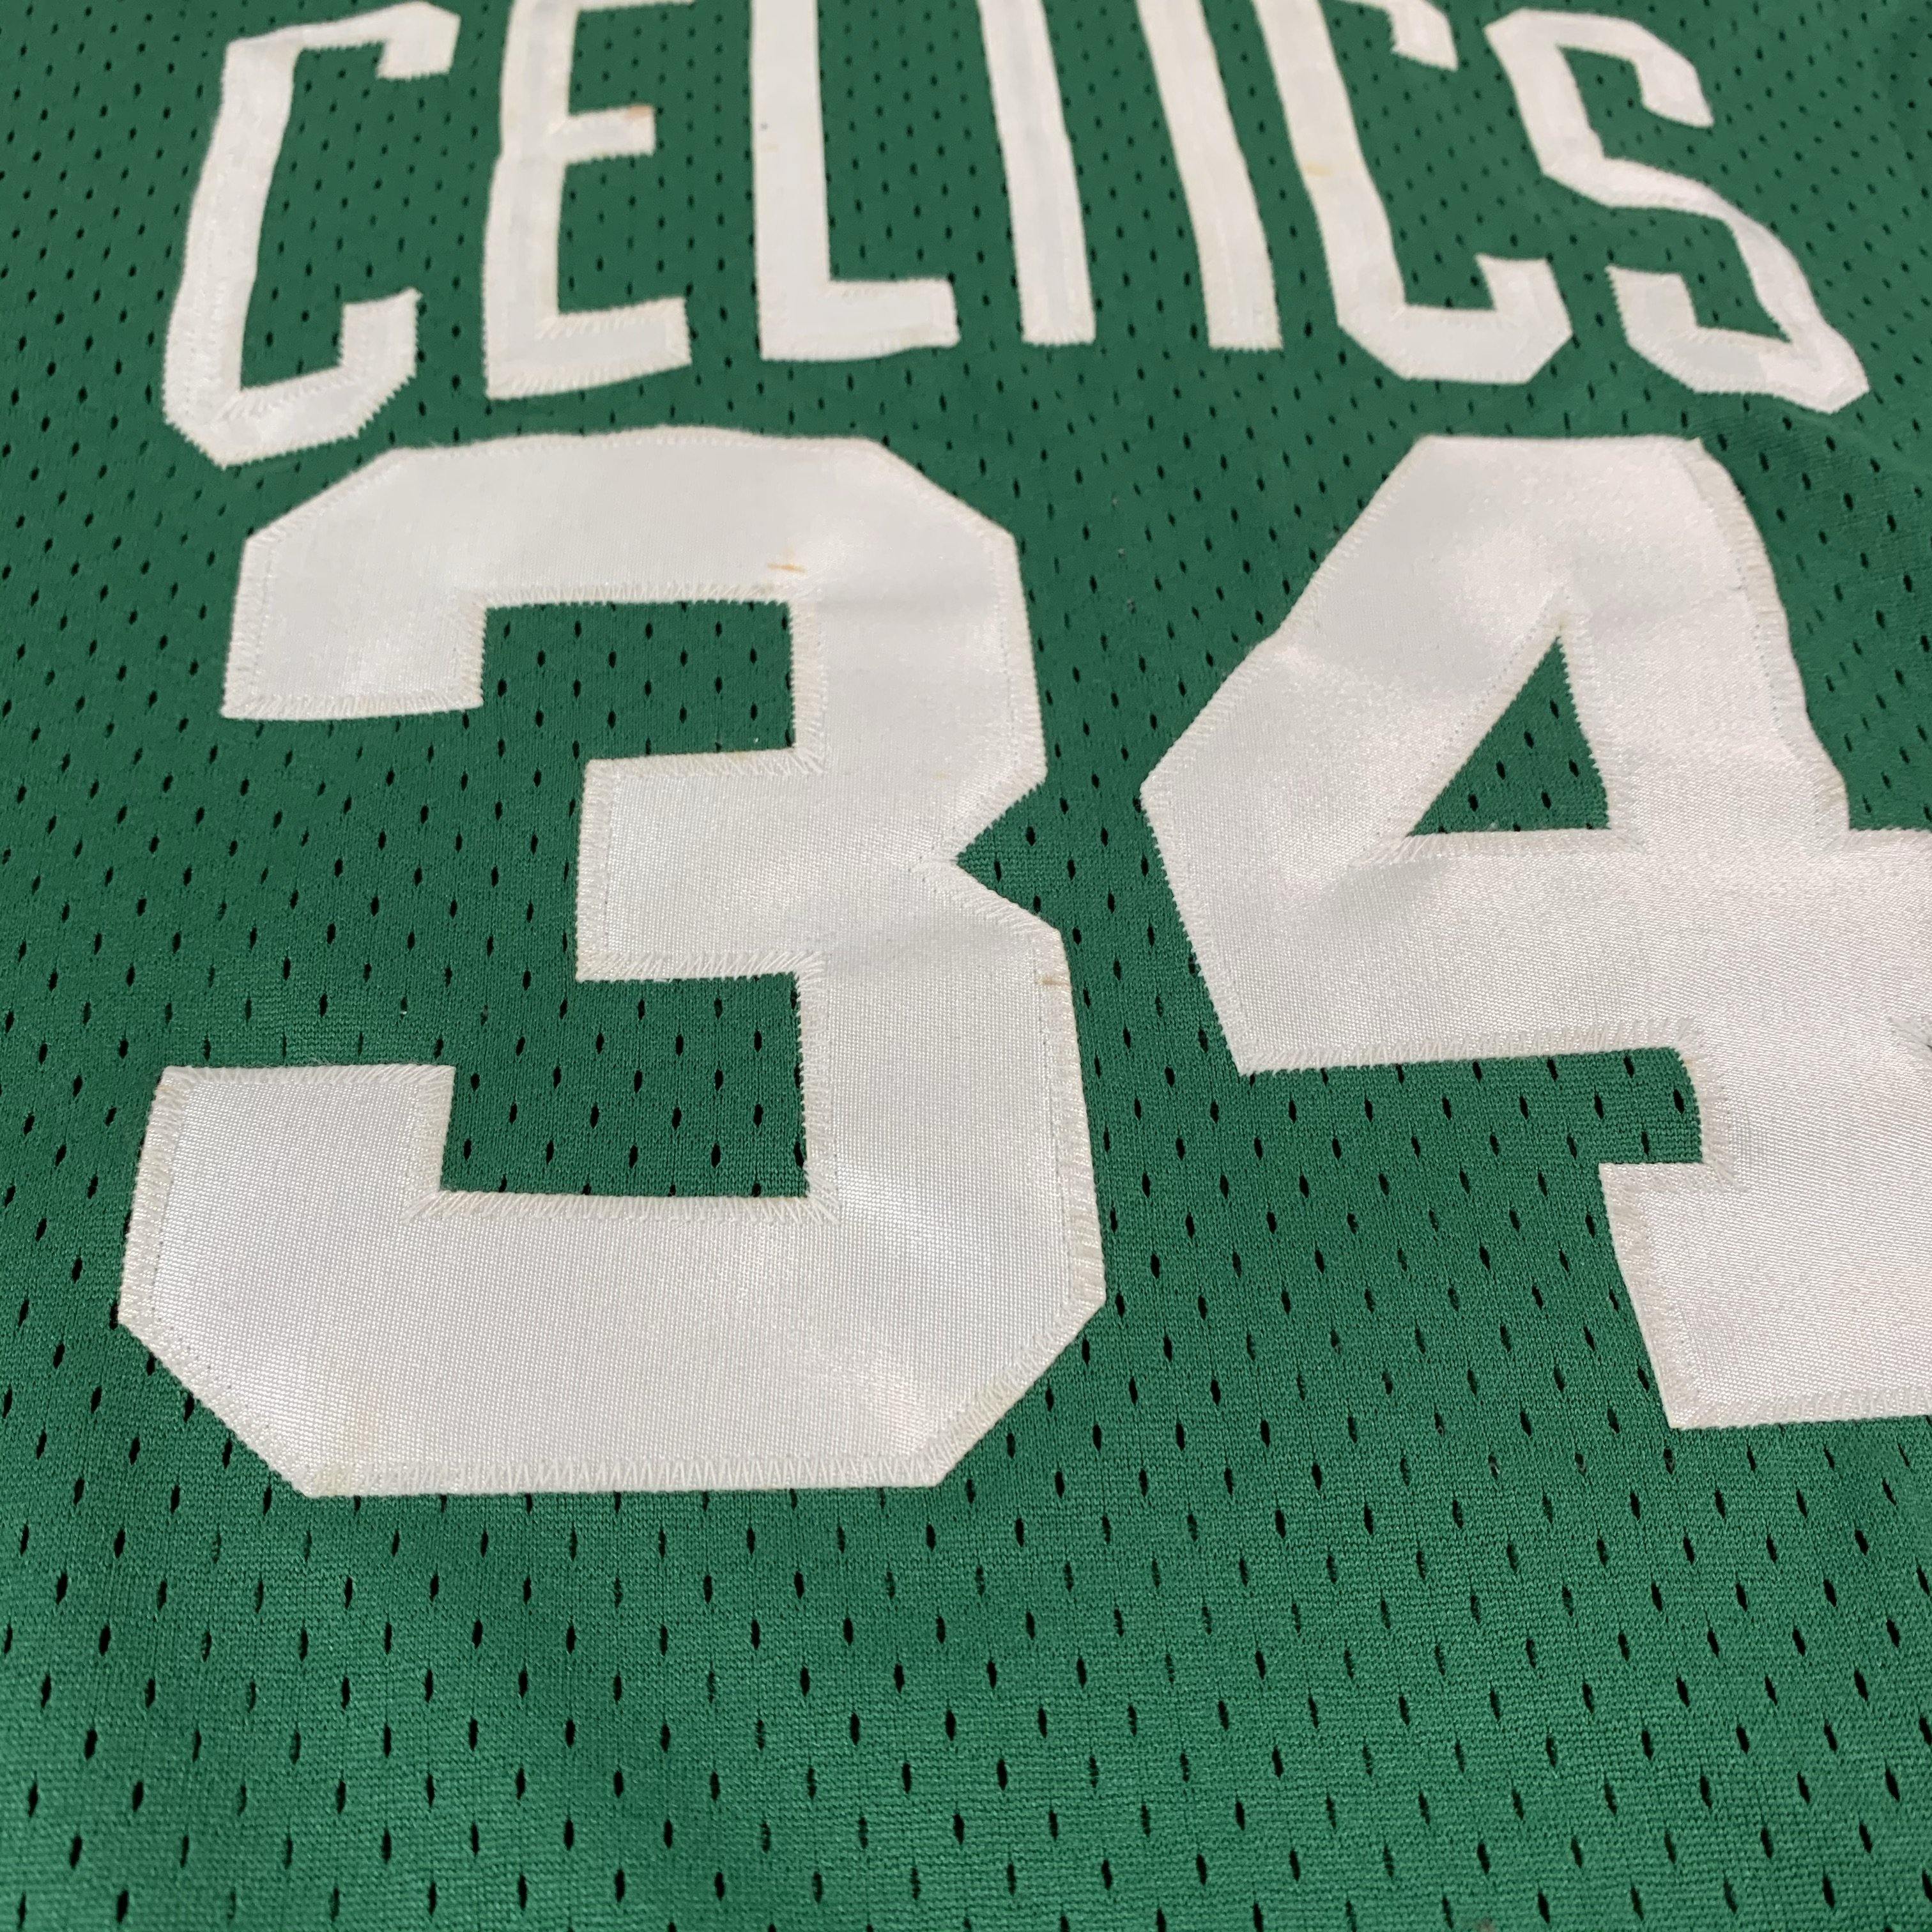 Boston Celtics Paul Pierce Champion Jersey Vintage NBA -  Hong